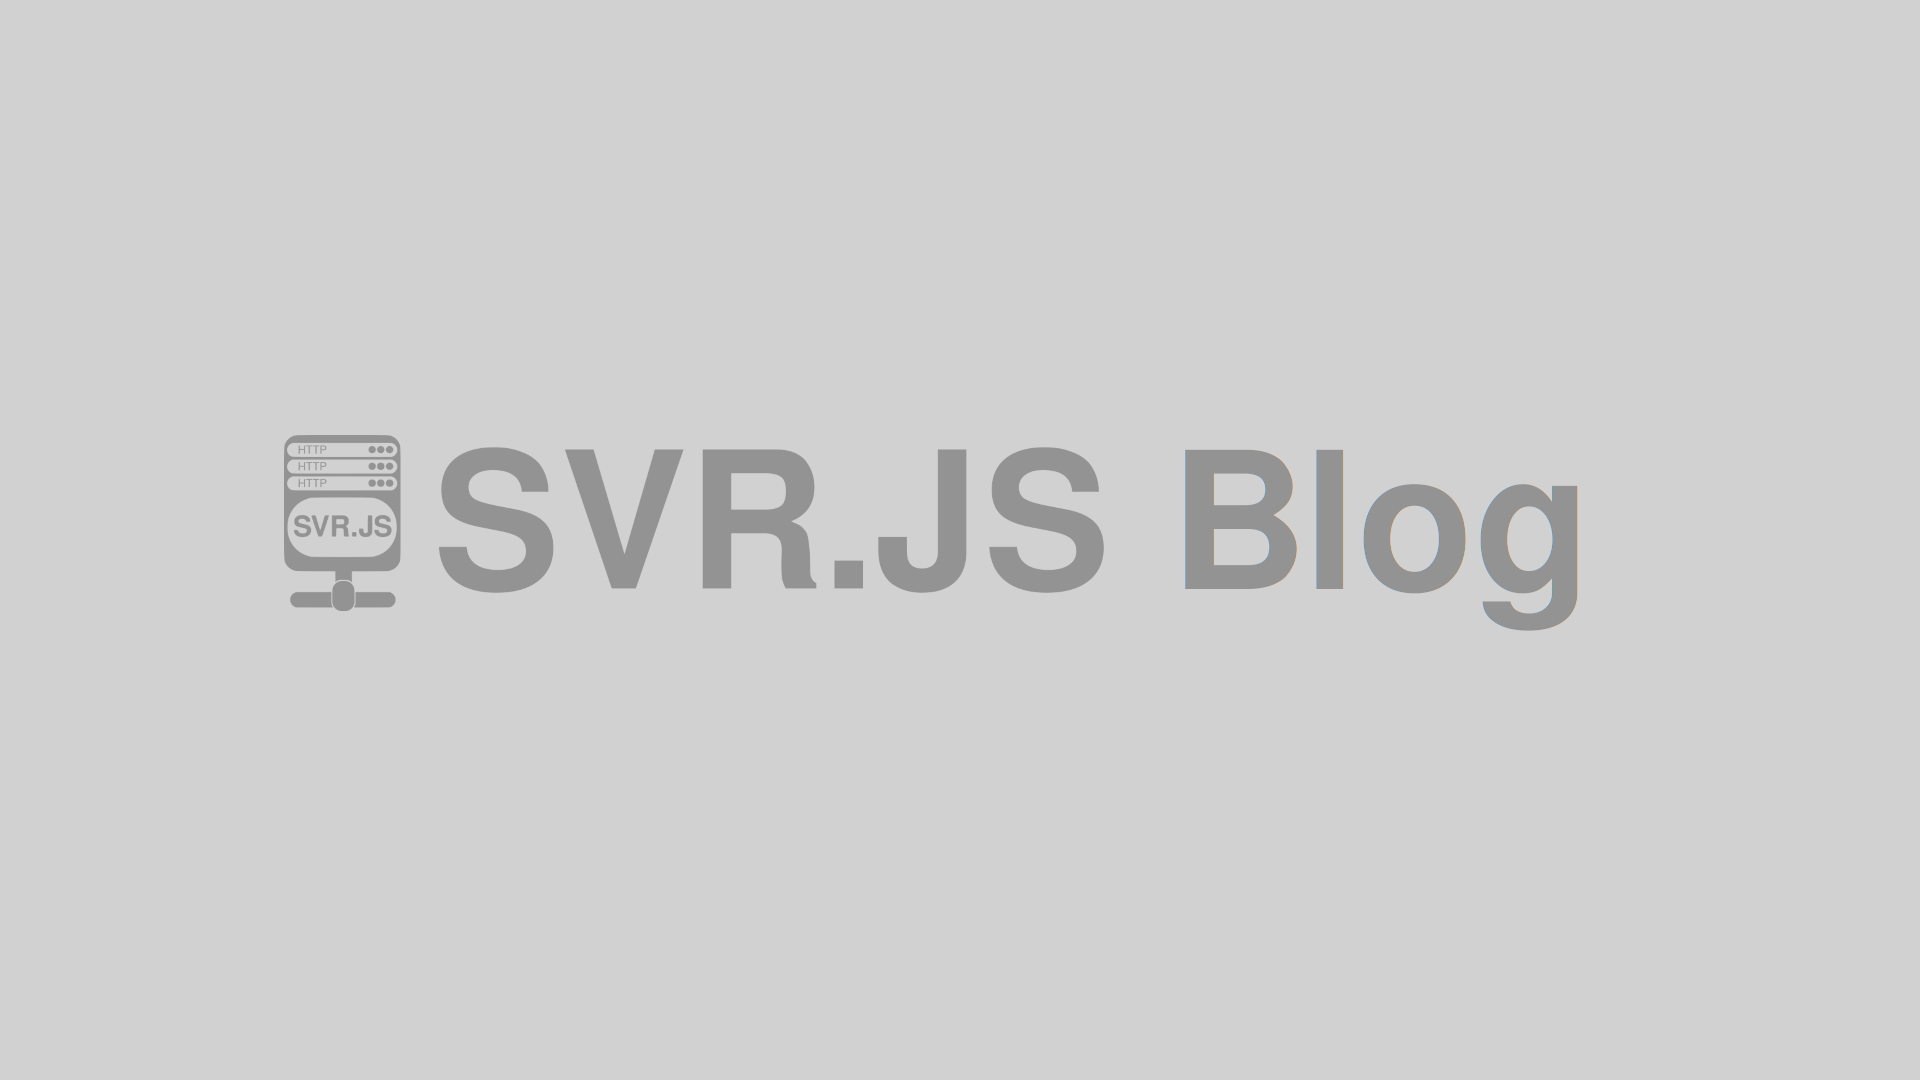 SVR.JS git server launched